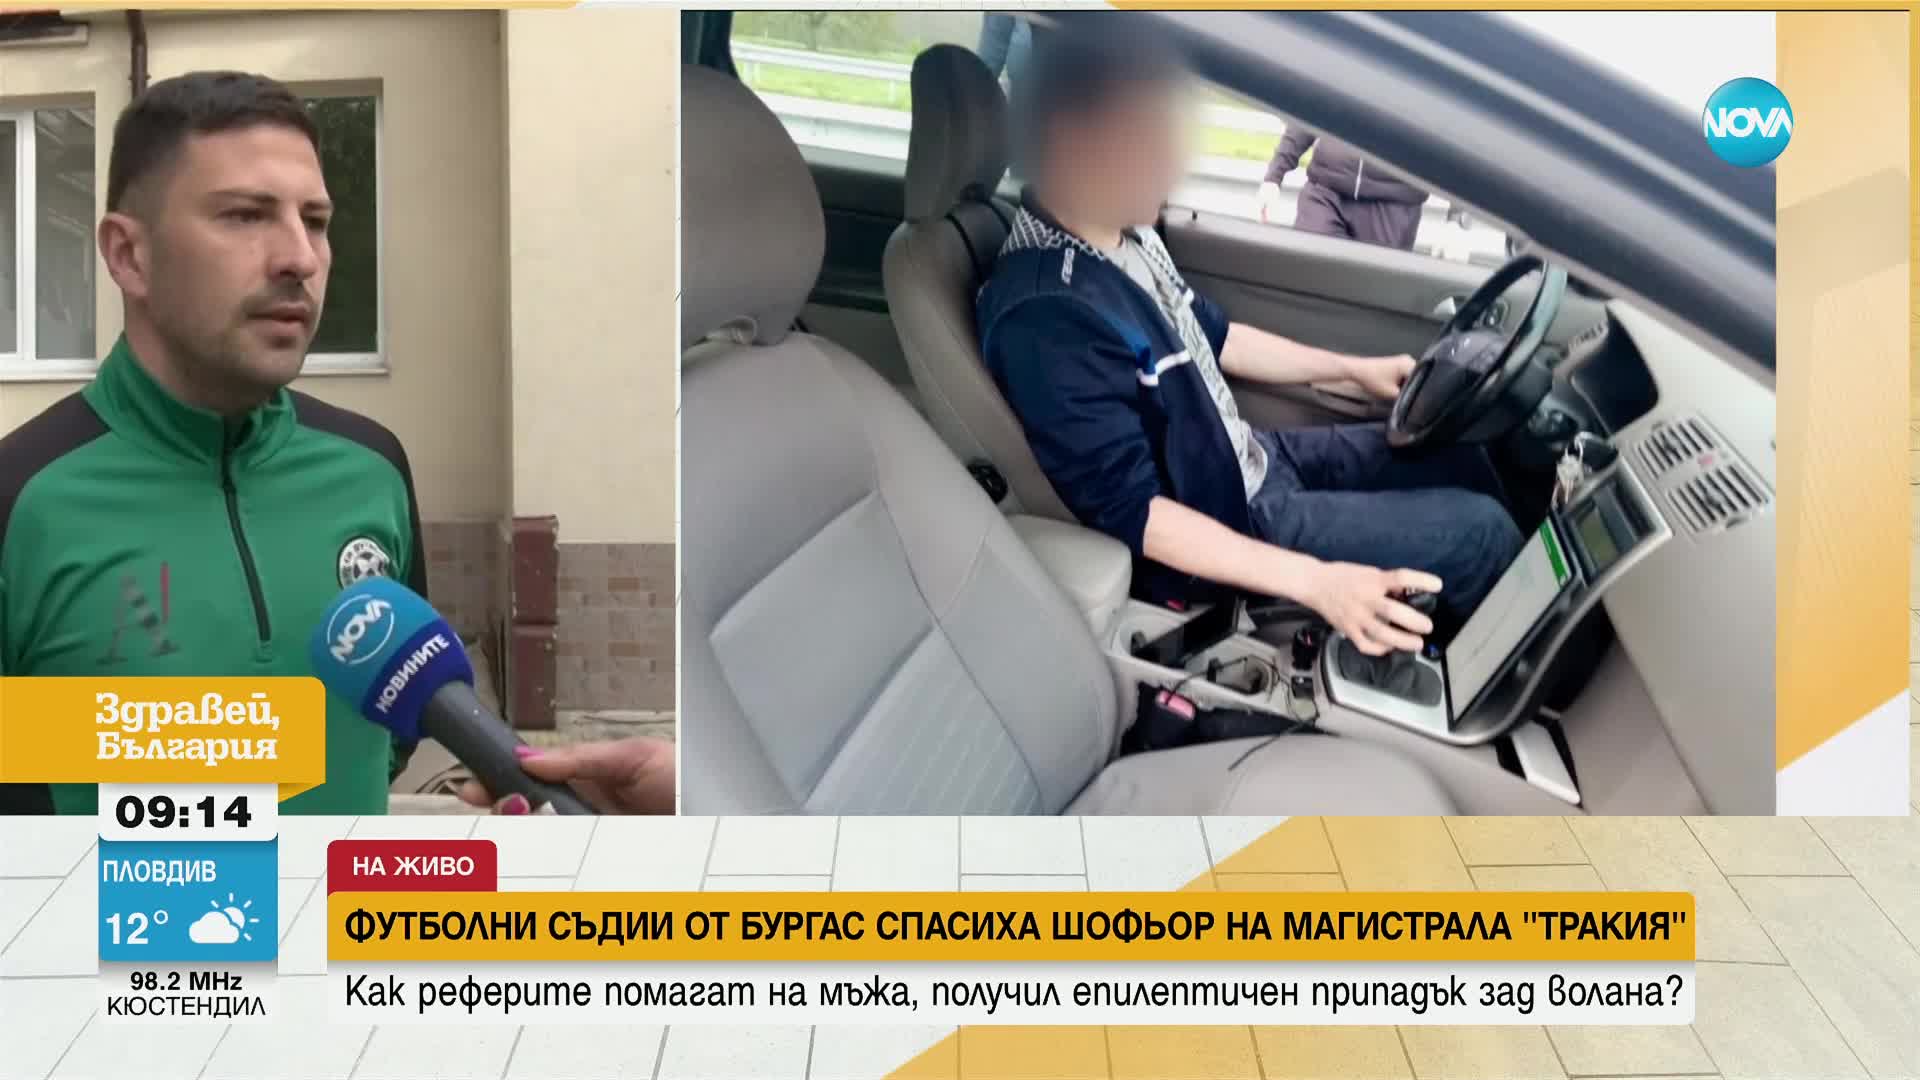 Футболни съдии от Бургас спасиха шофьор на магистрала „Тракия”